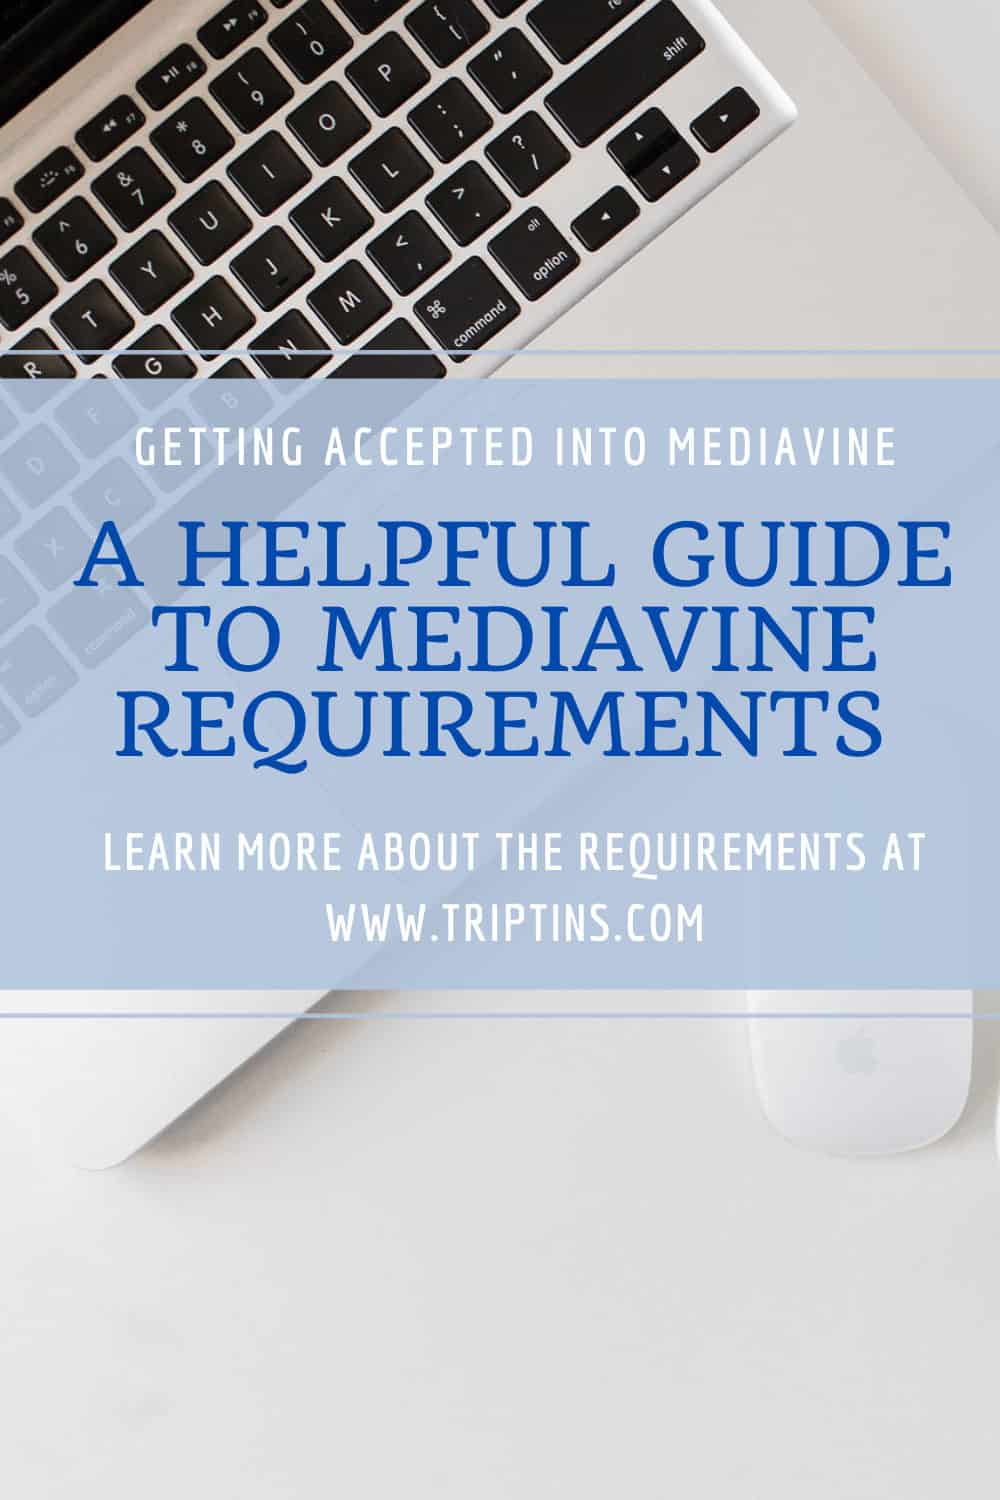 Mediavine Requirements Blog